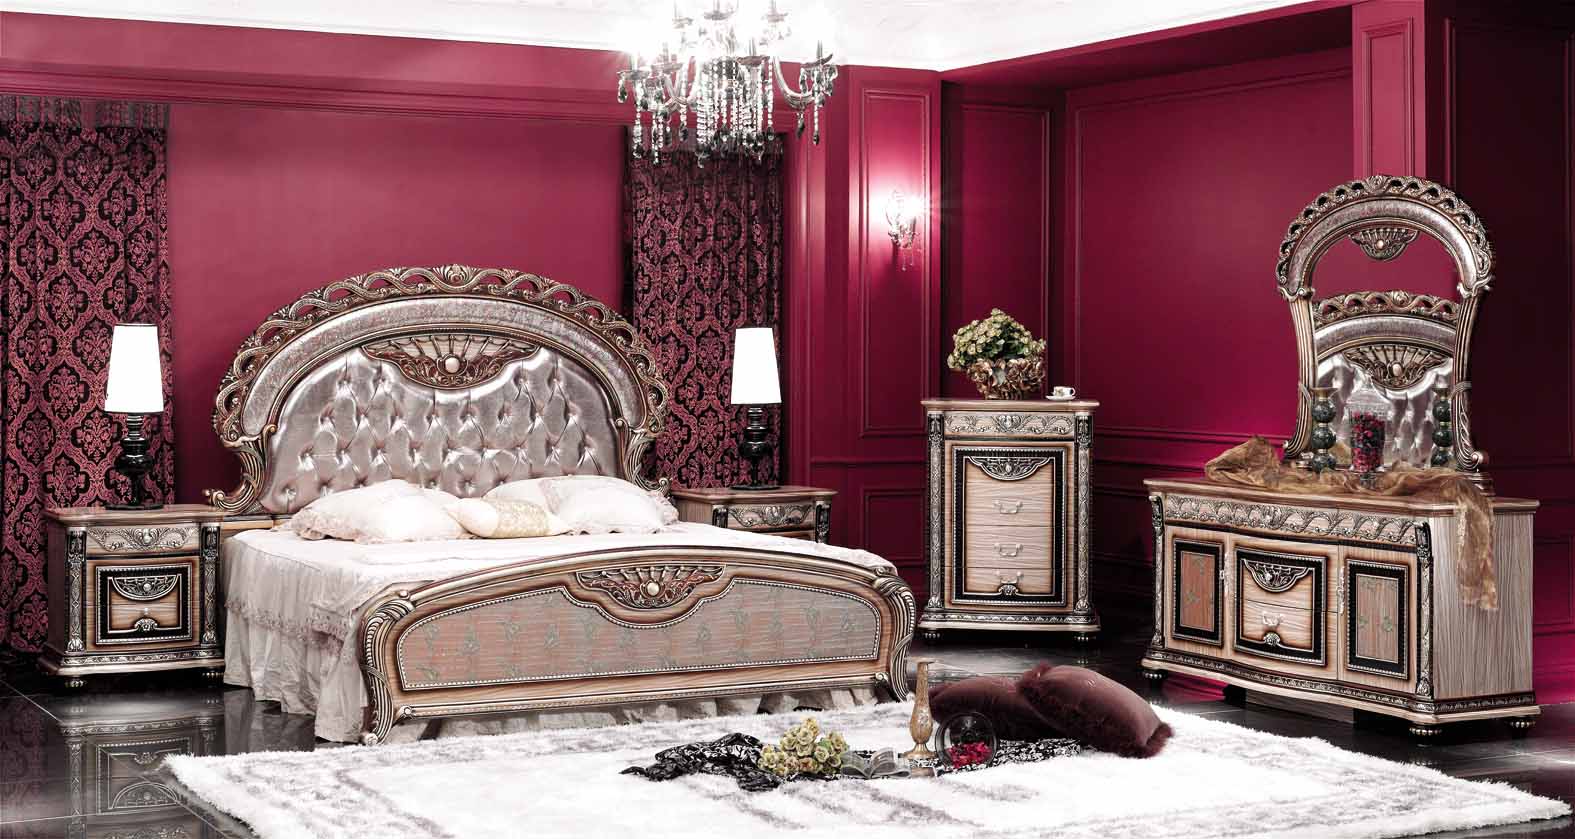 Romantic classic bedroom decorations